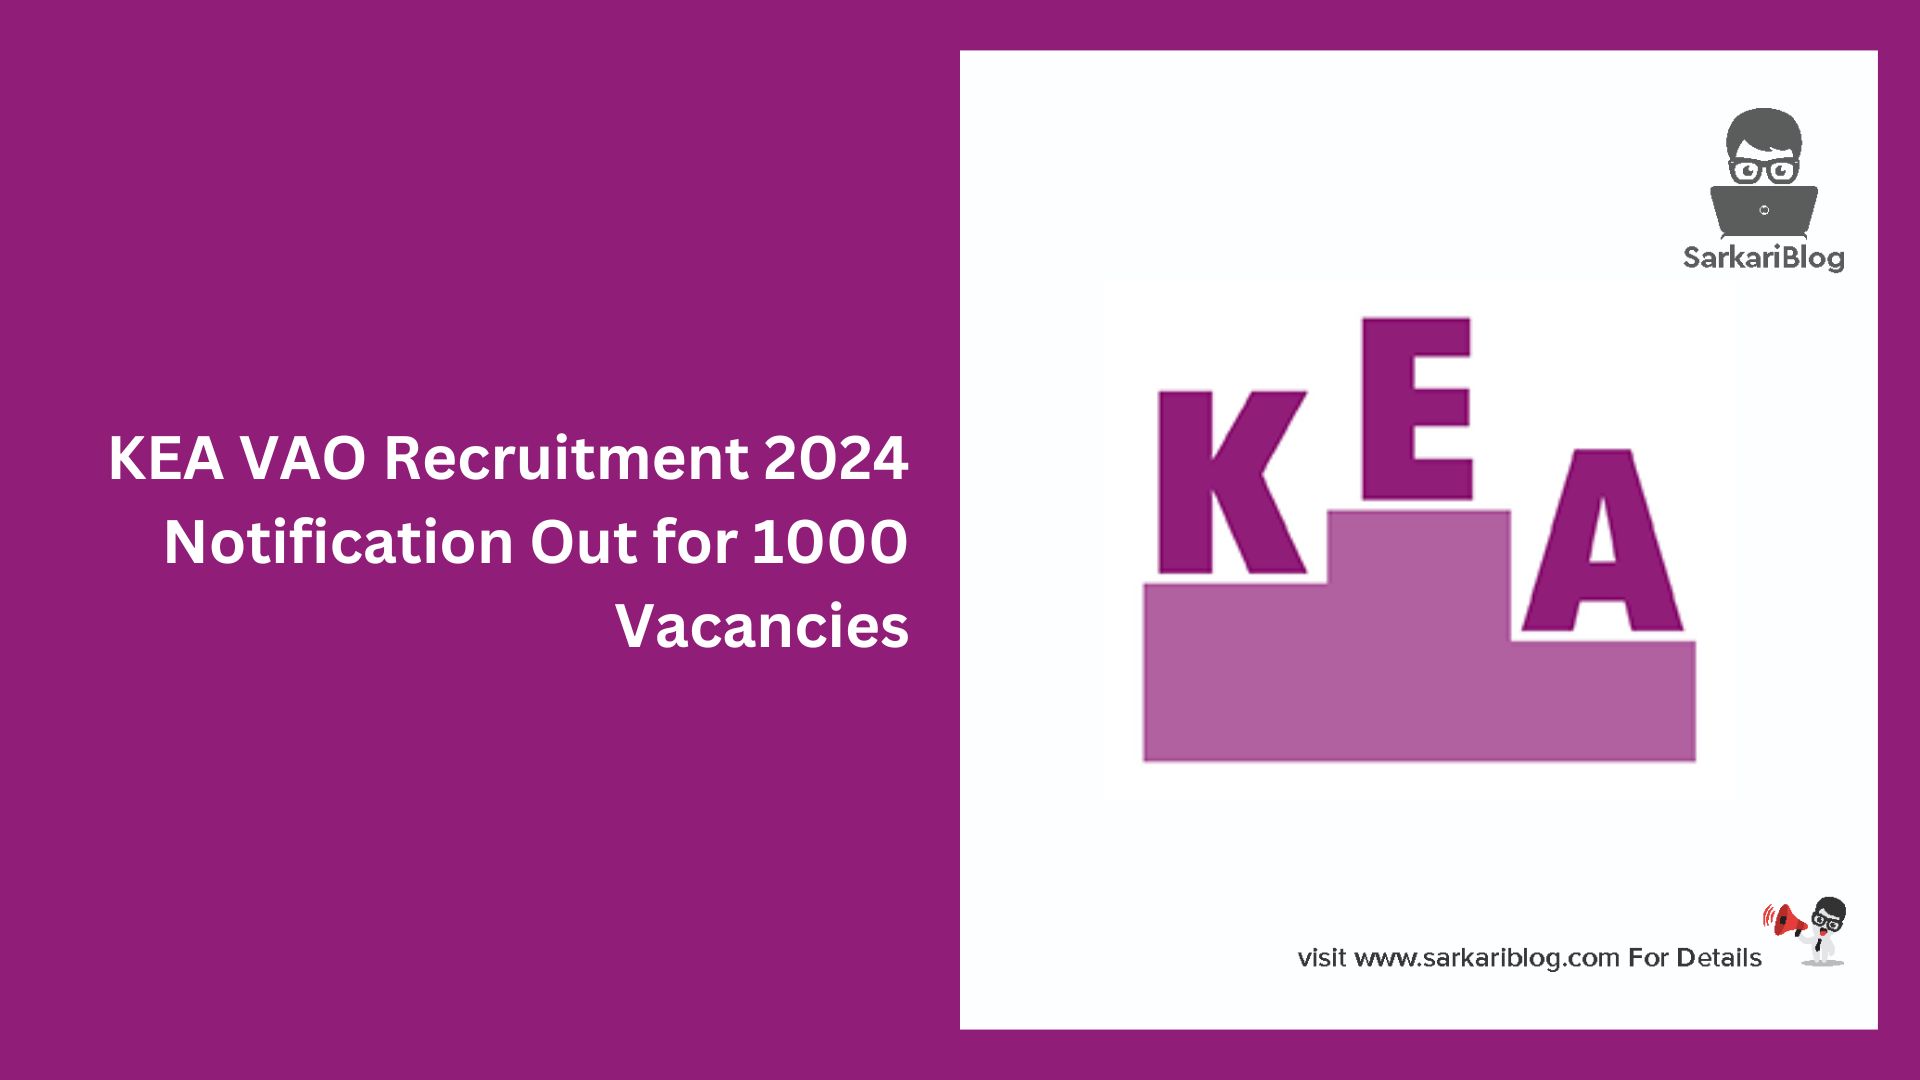 KEA VAO Recruitment 2024